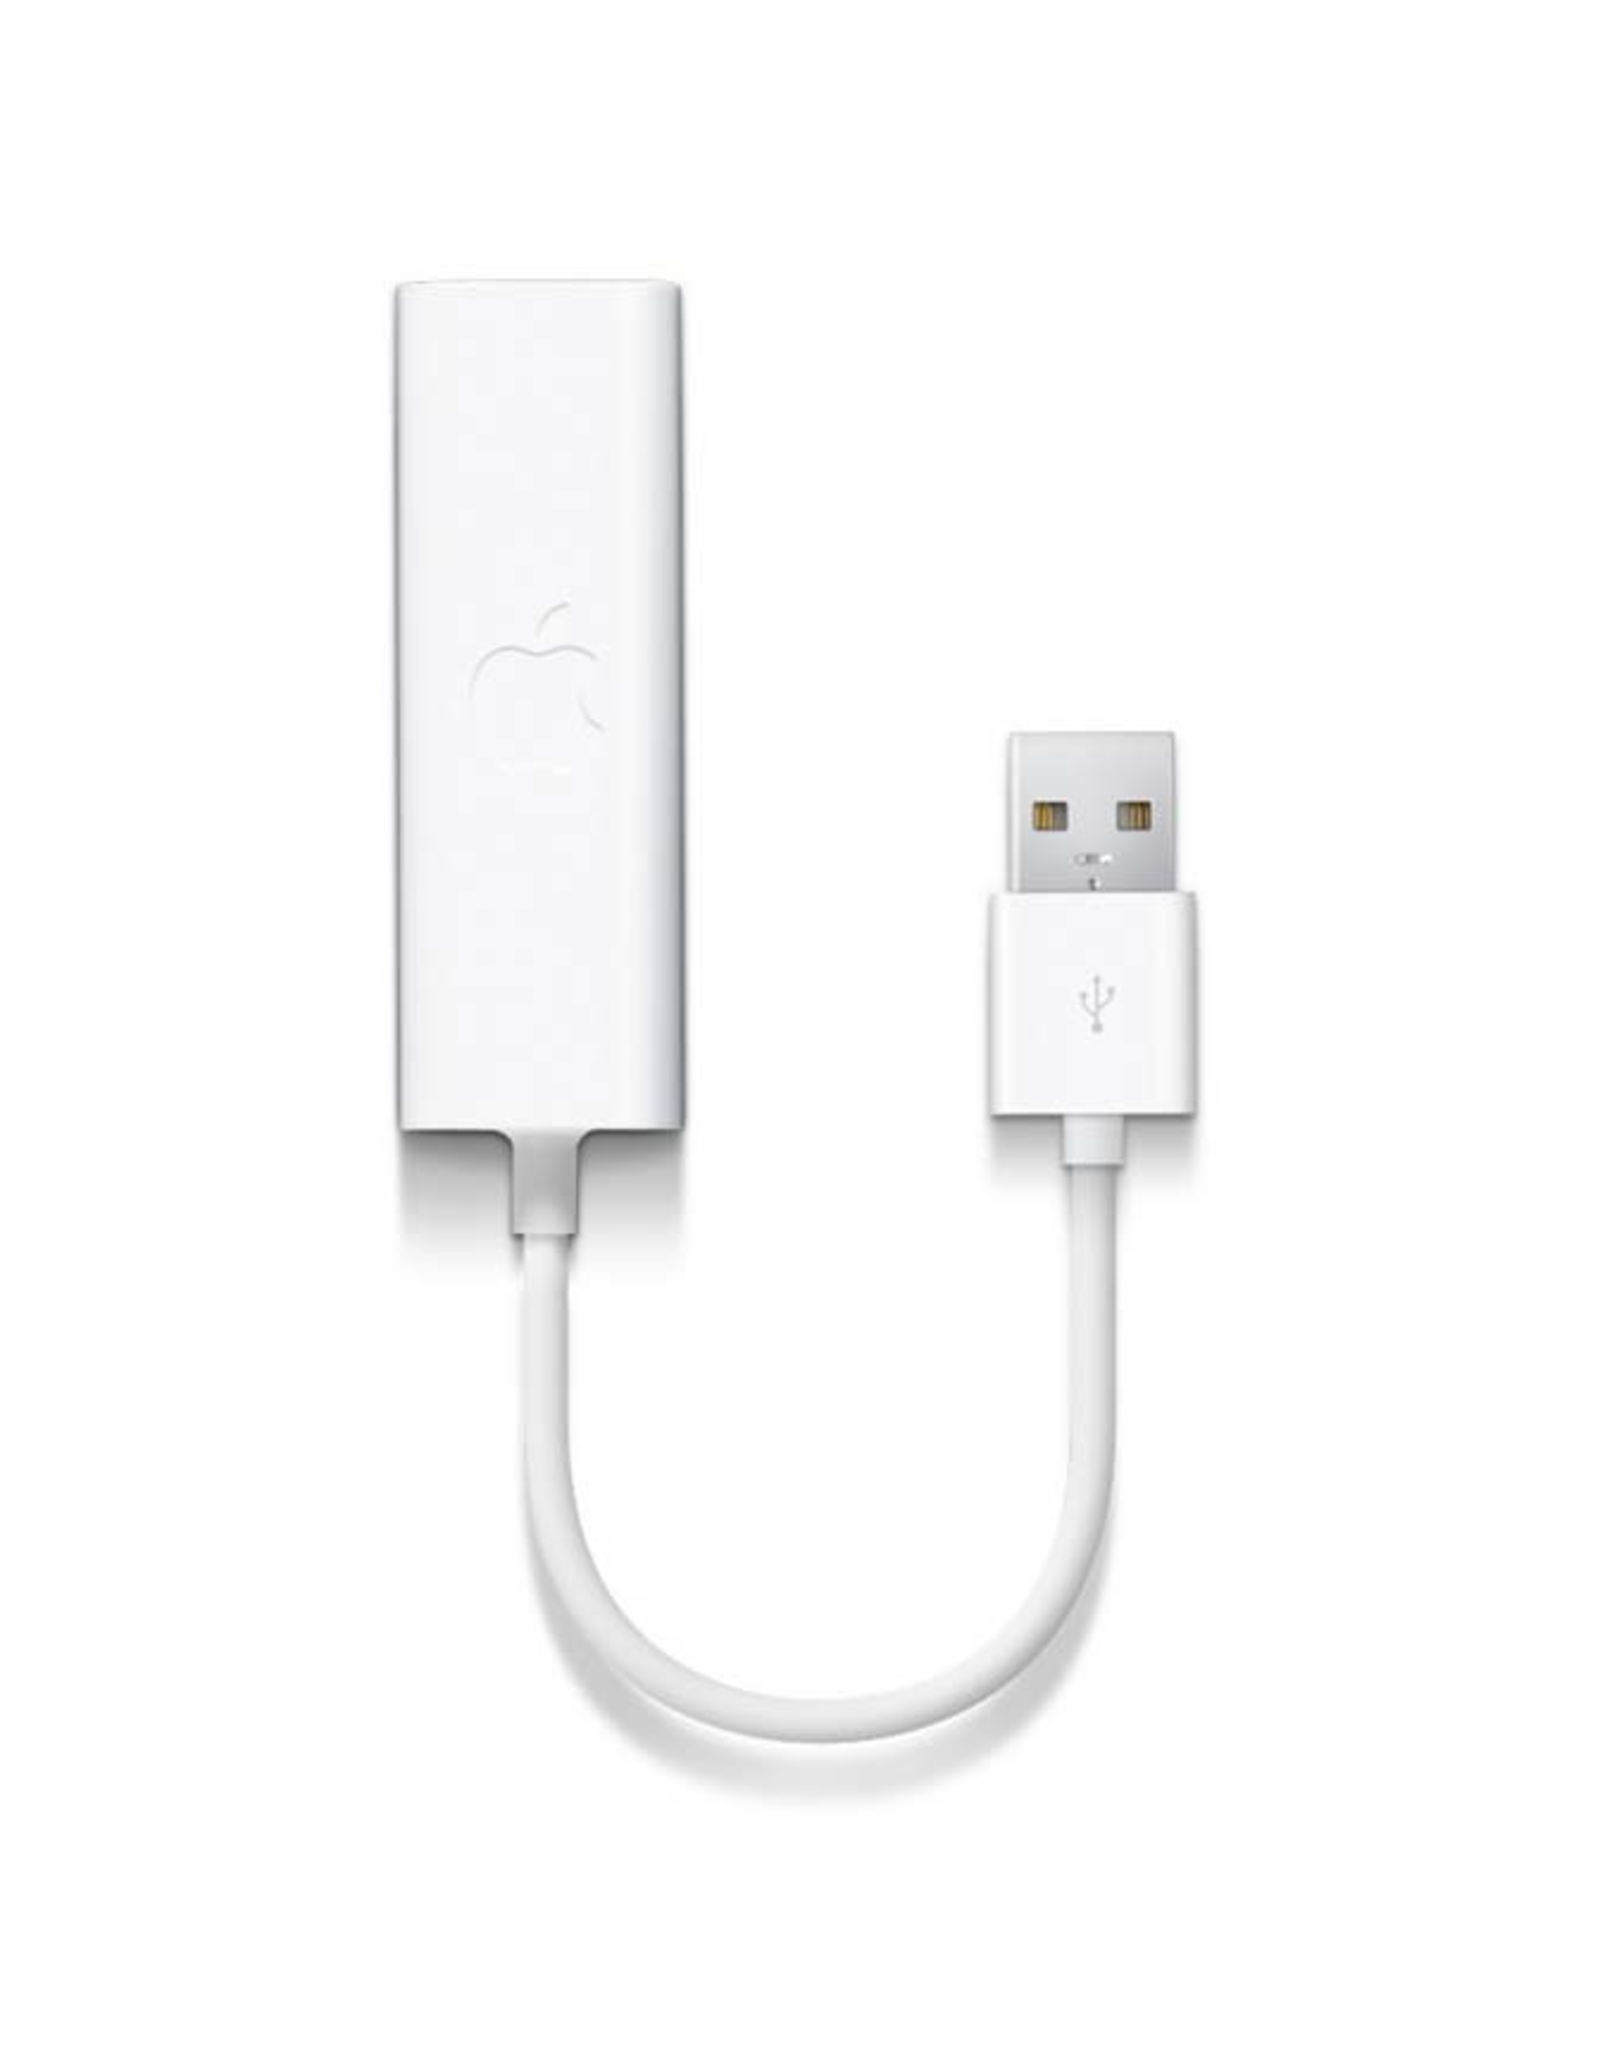 Apple Apple USB Ethernet Adapter